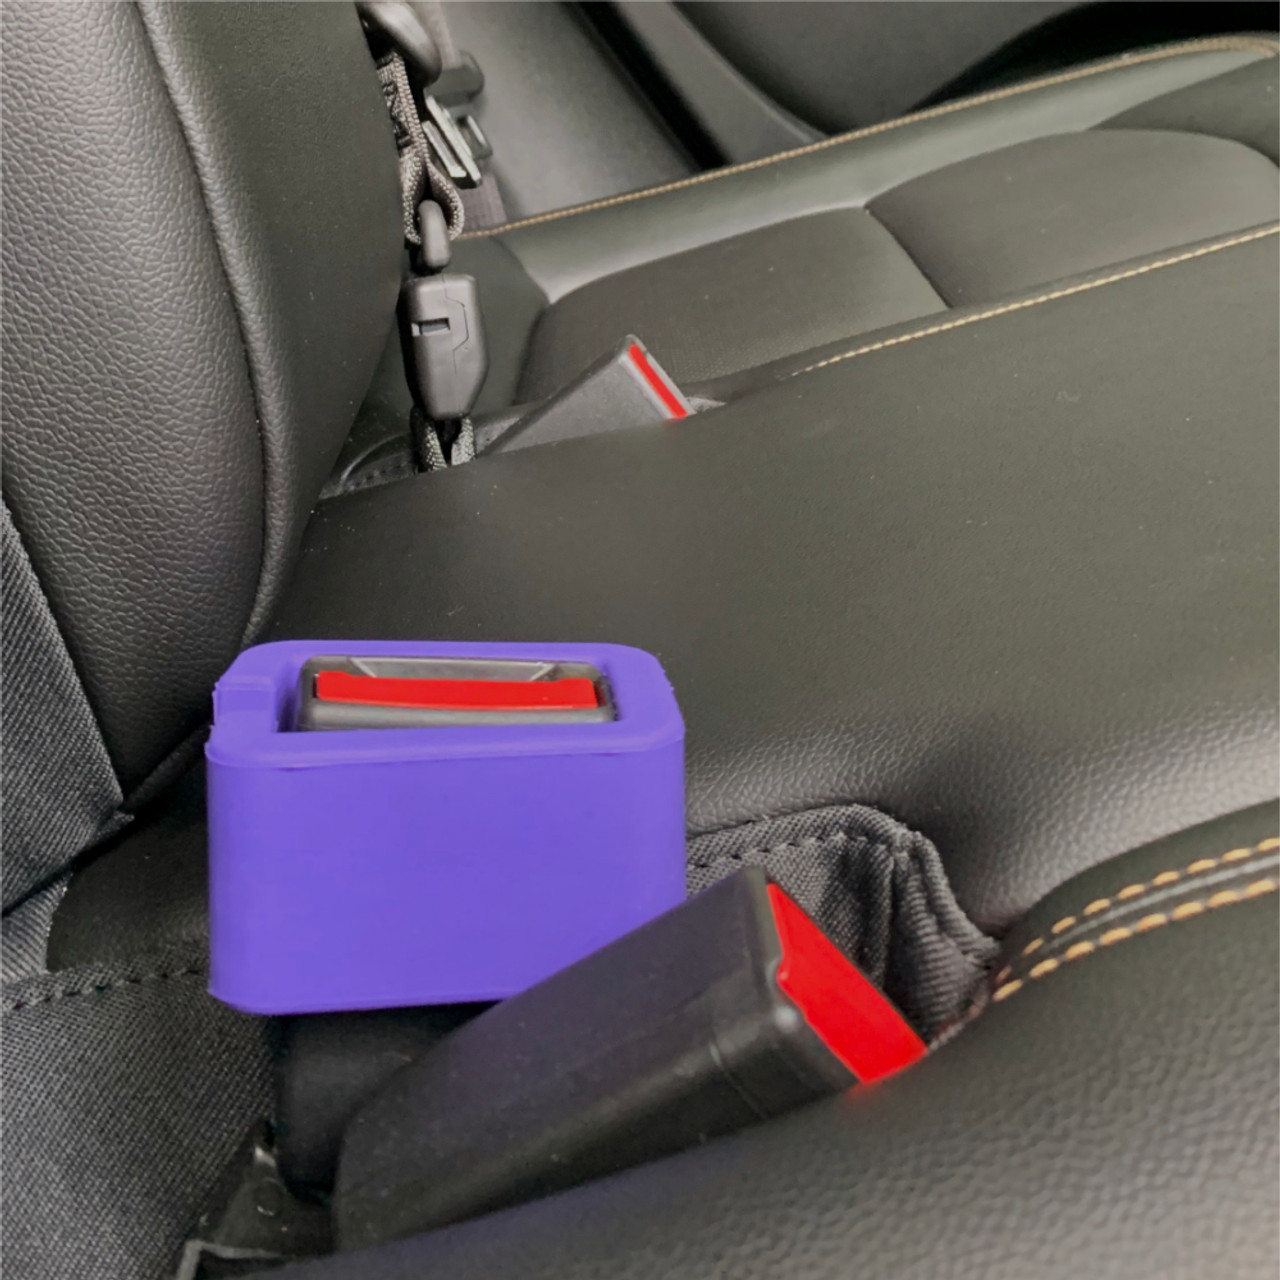 Car Seat Belt Buckle Holder, 2 Pack, Seatbelt Buckle Booster Makes Buckling  Easier for Kids (BPA Free), Upright Your Seat Belt Receiver for Easy